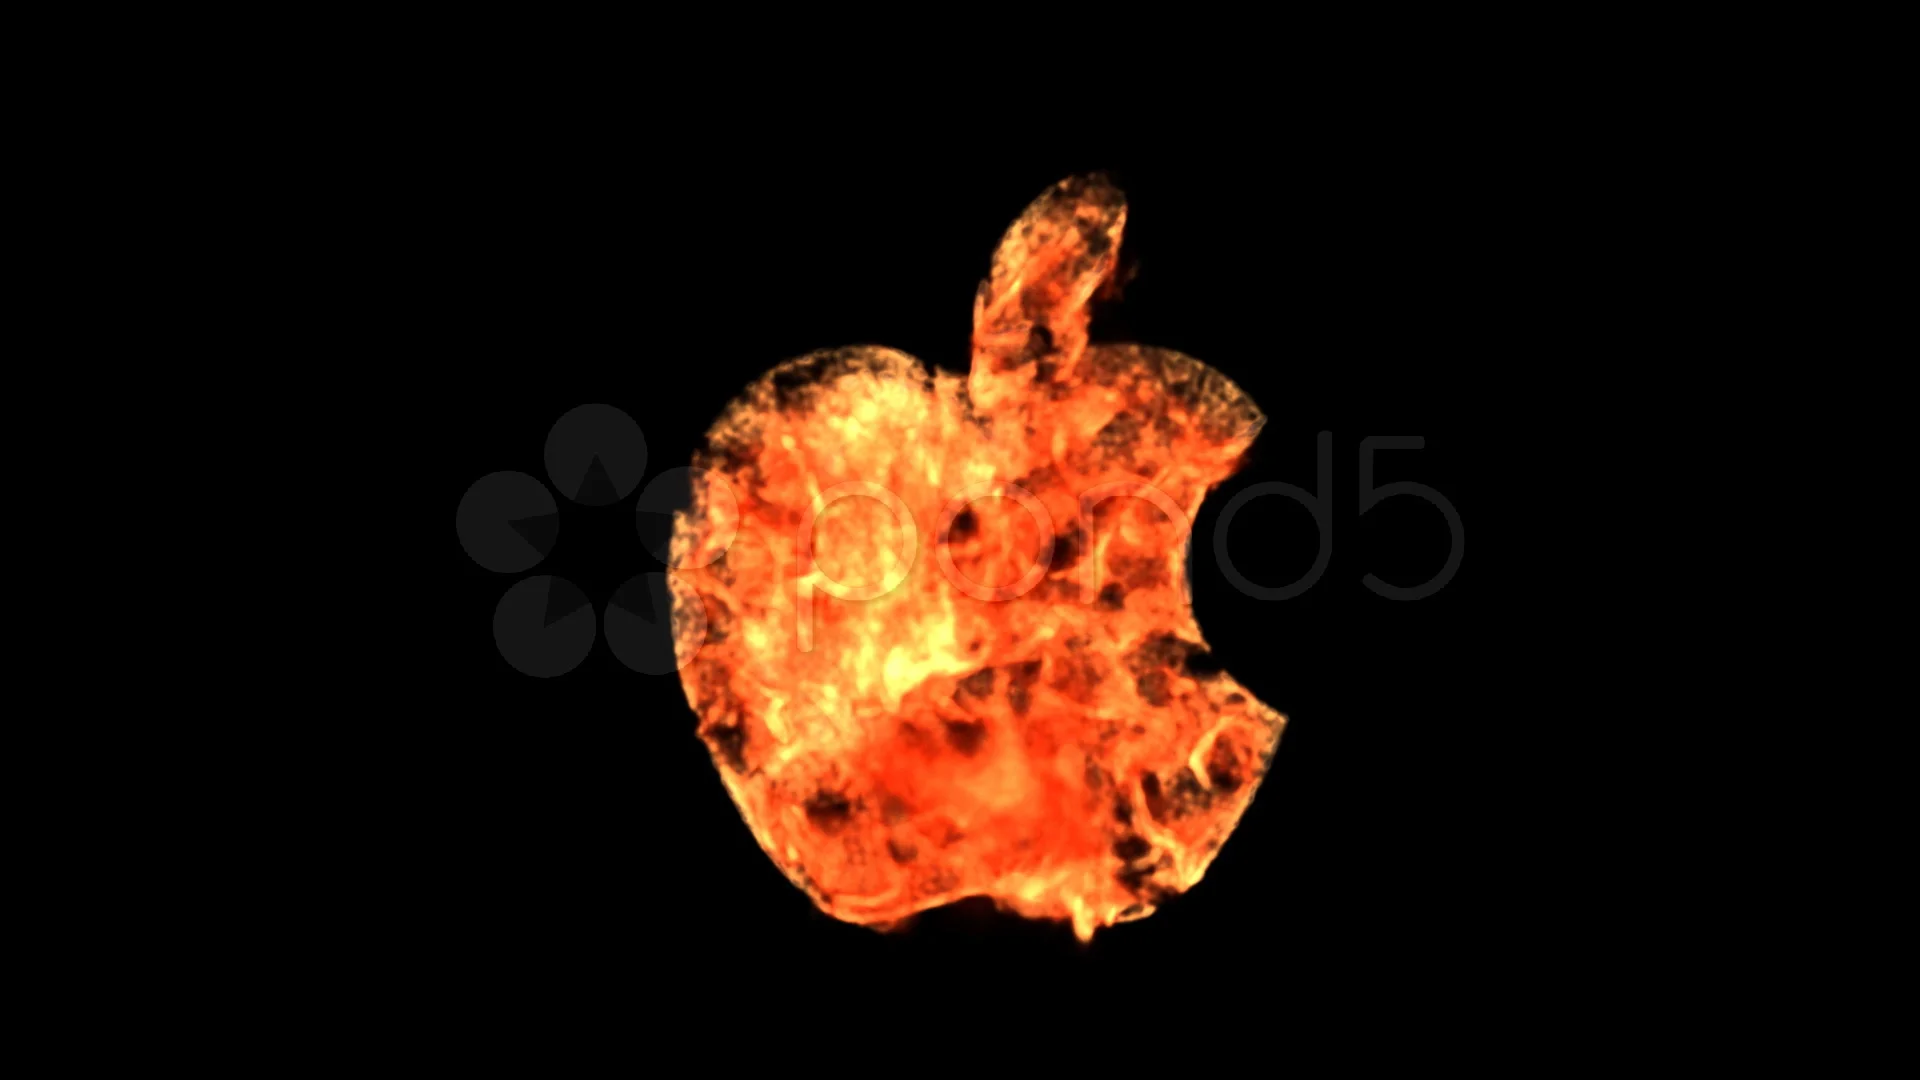 cool apple logos on fire